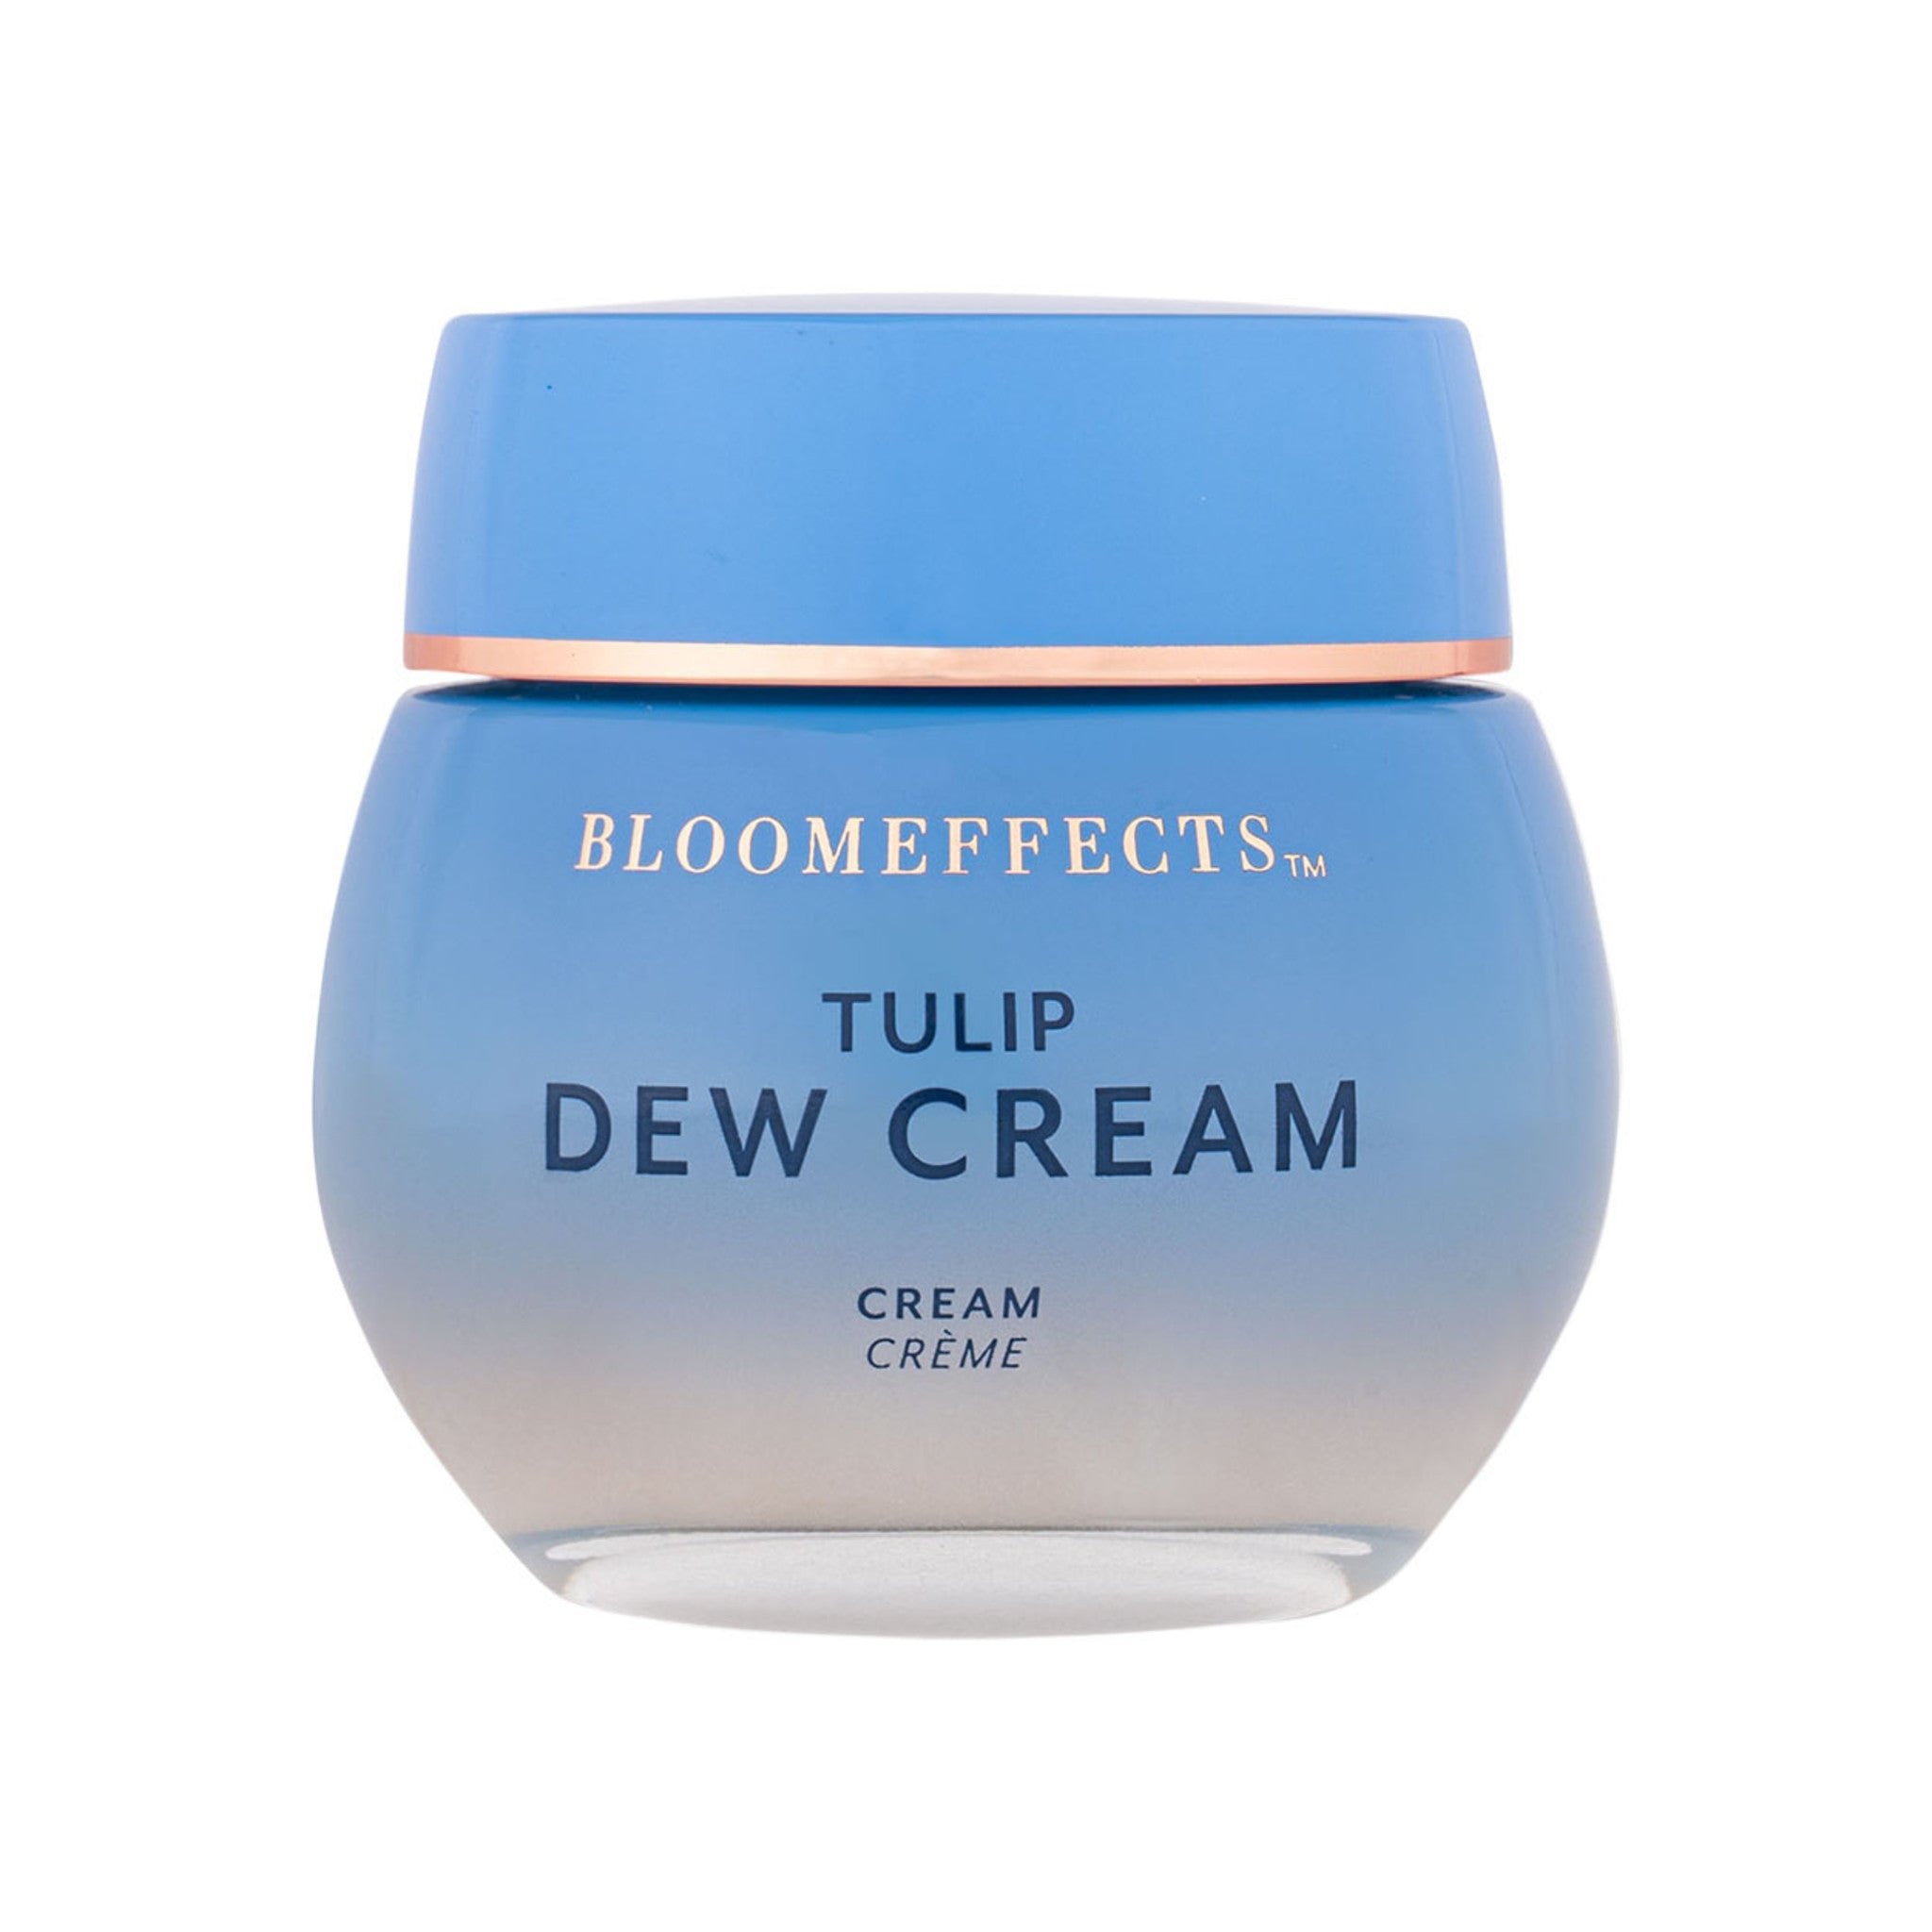 Bloomeffects Tulip Dew Cream main image.